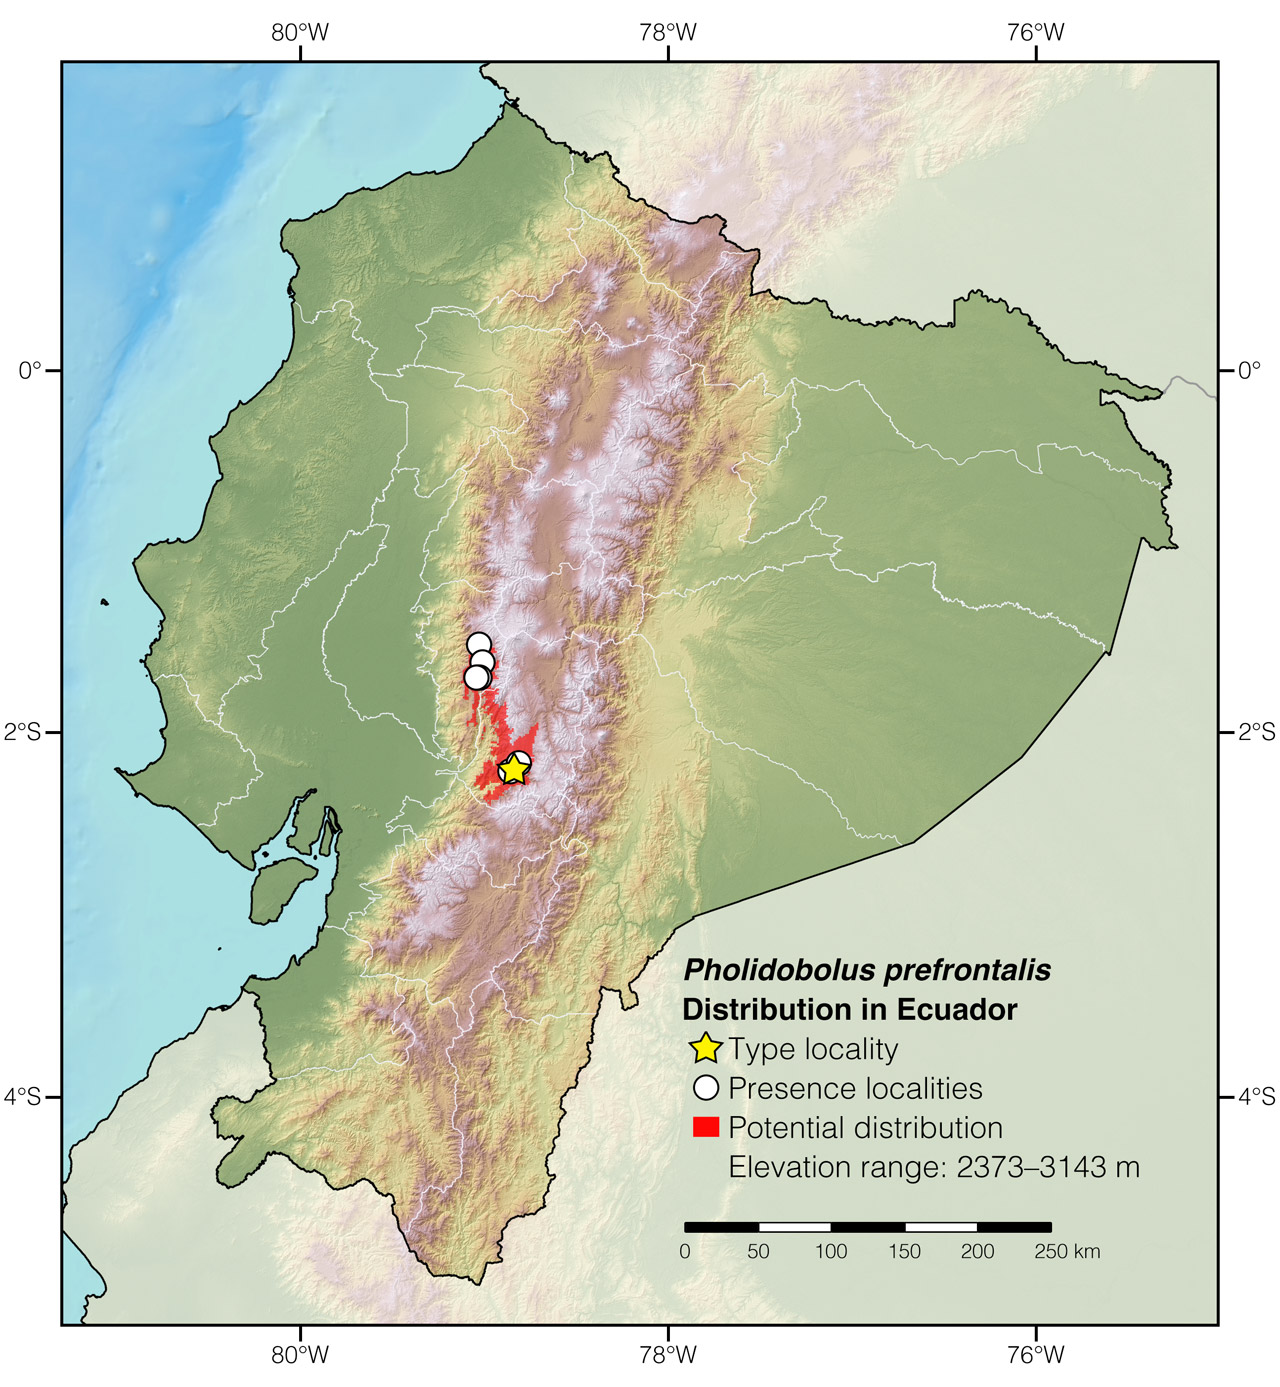 Distribution of Pholidobolus prefrontalis in Ecuador